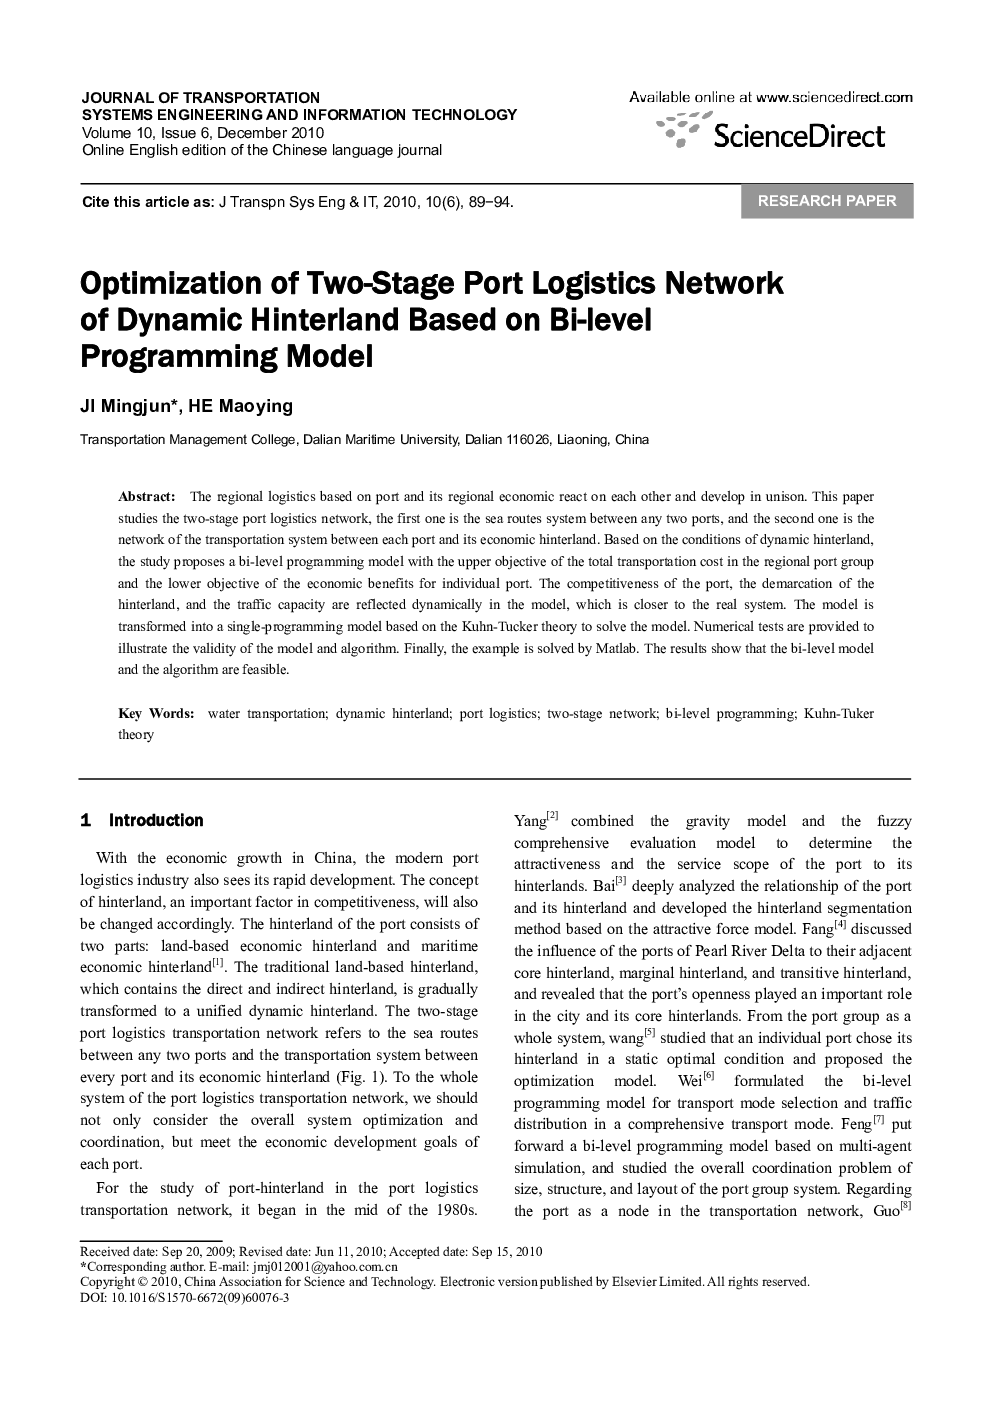 Optimization of Two-Stage Port Logistics Network of Dynamic Hinterland Based on Bi-level Programming Model